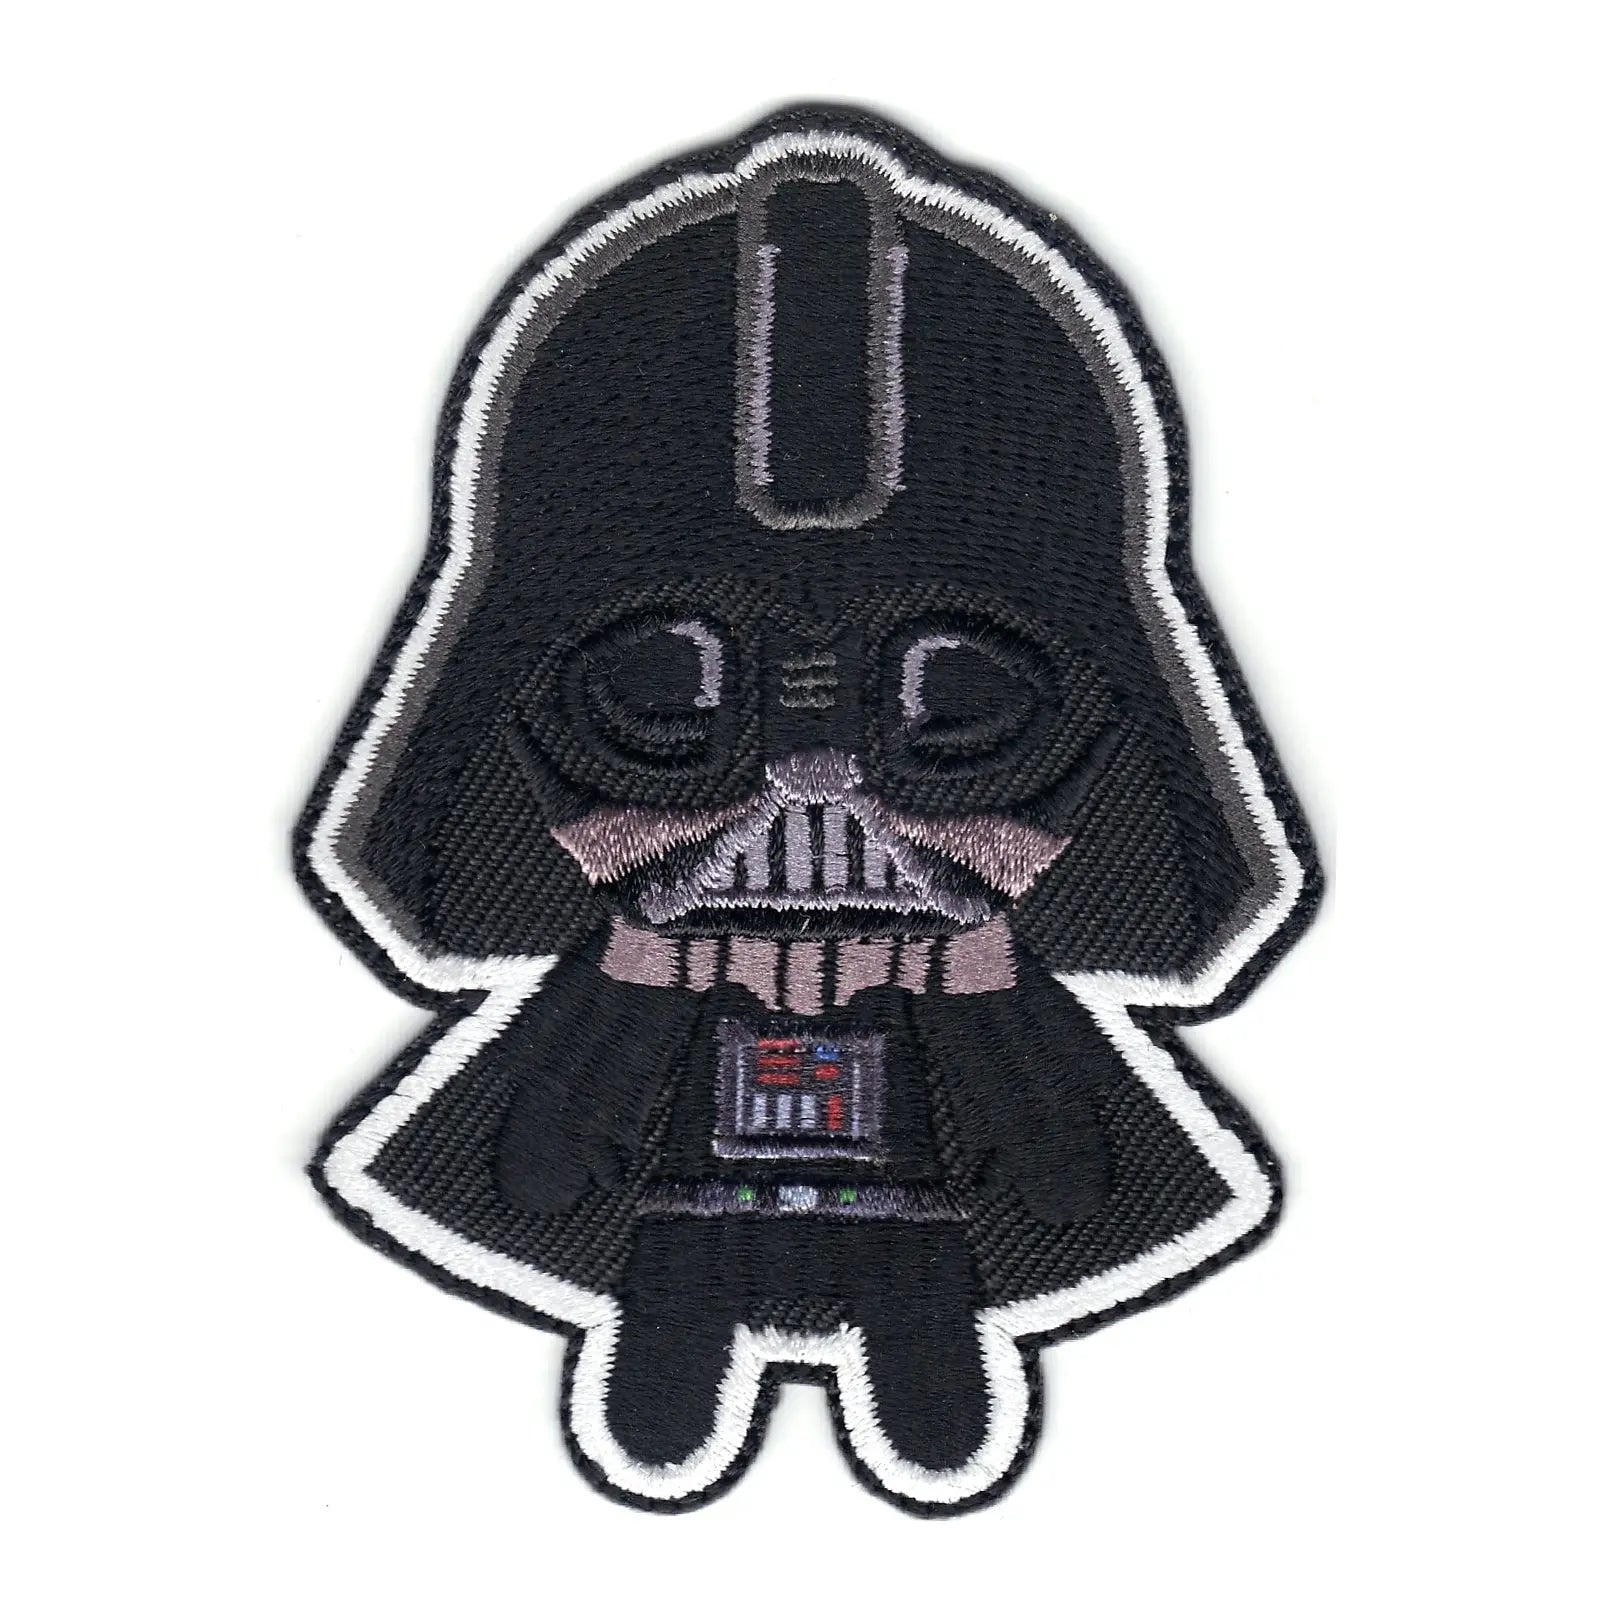 Star Wars The Phantom Menace Darth Vader Emoji Logo Iron on Patch 